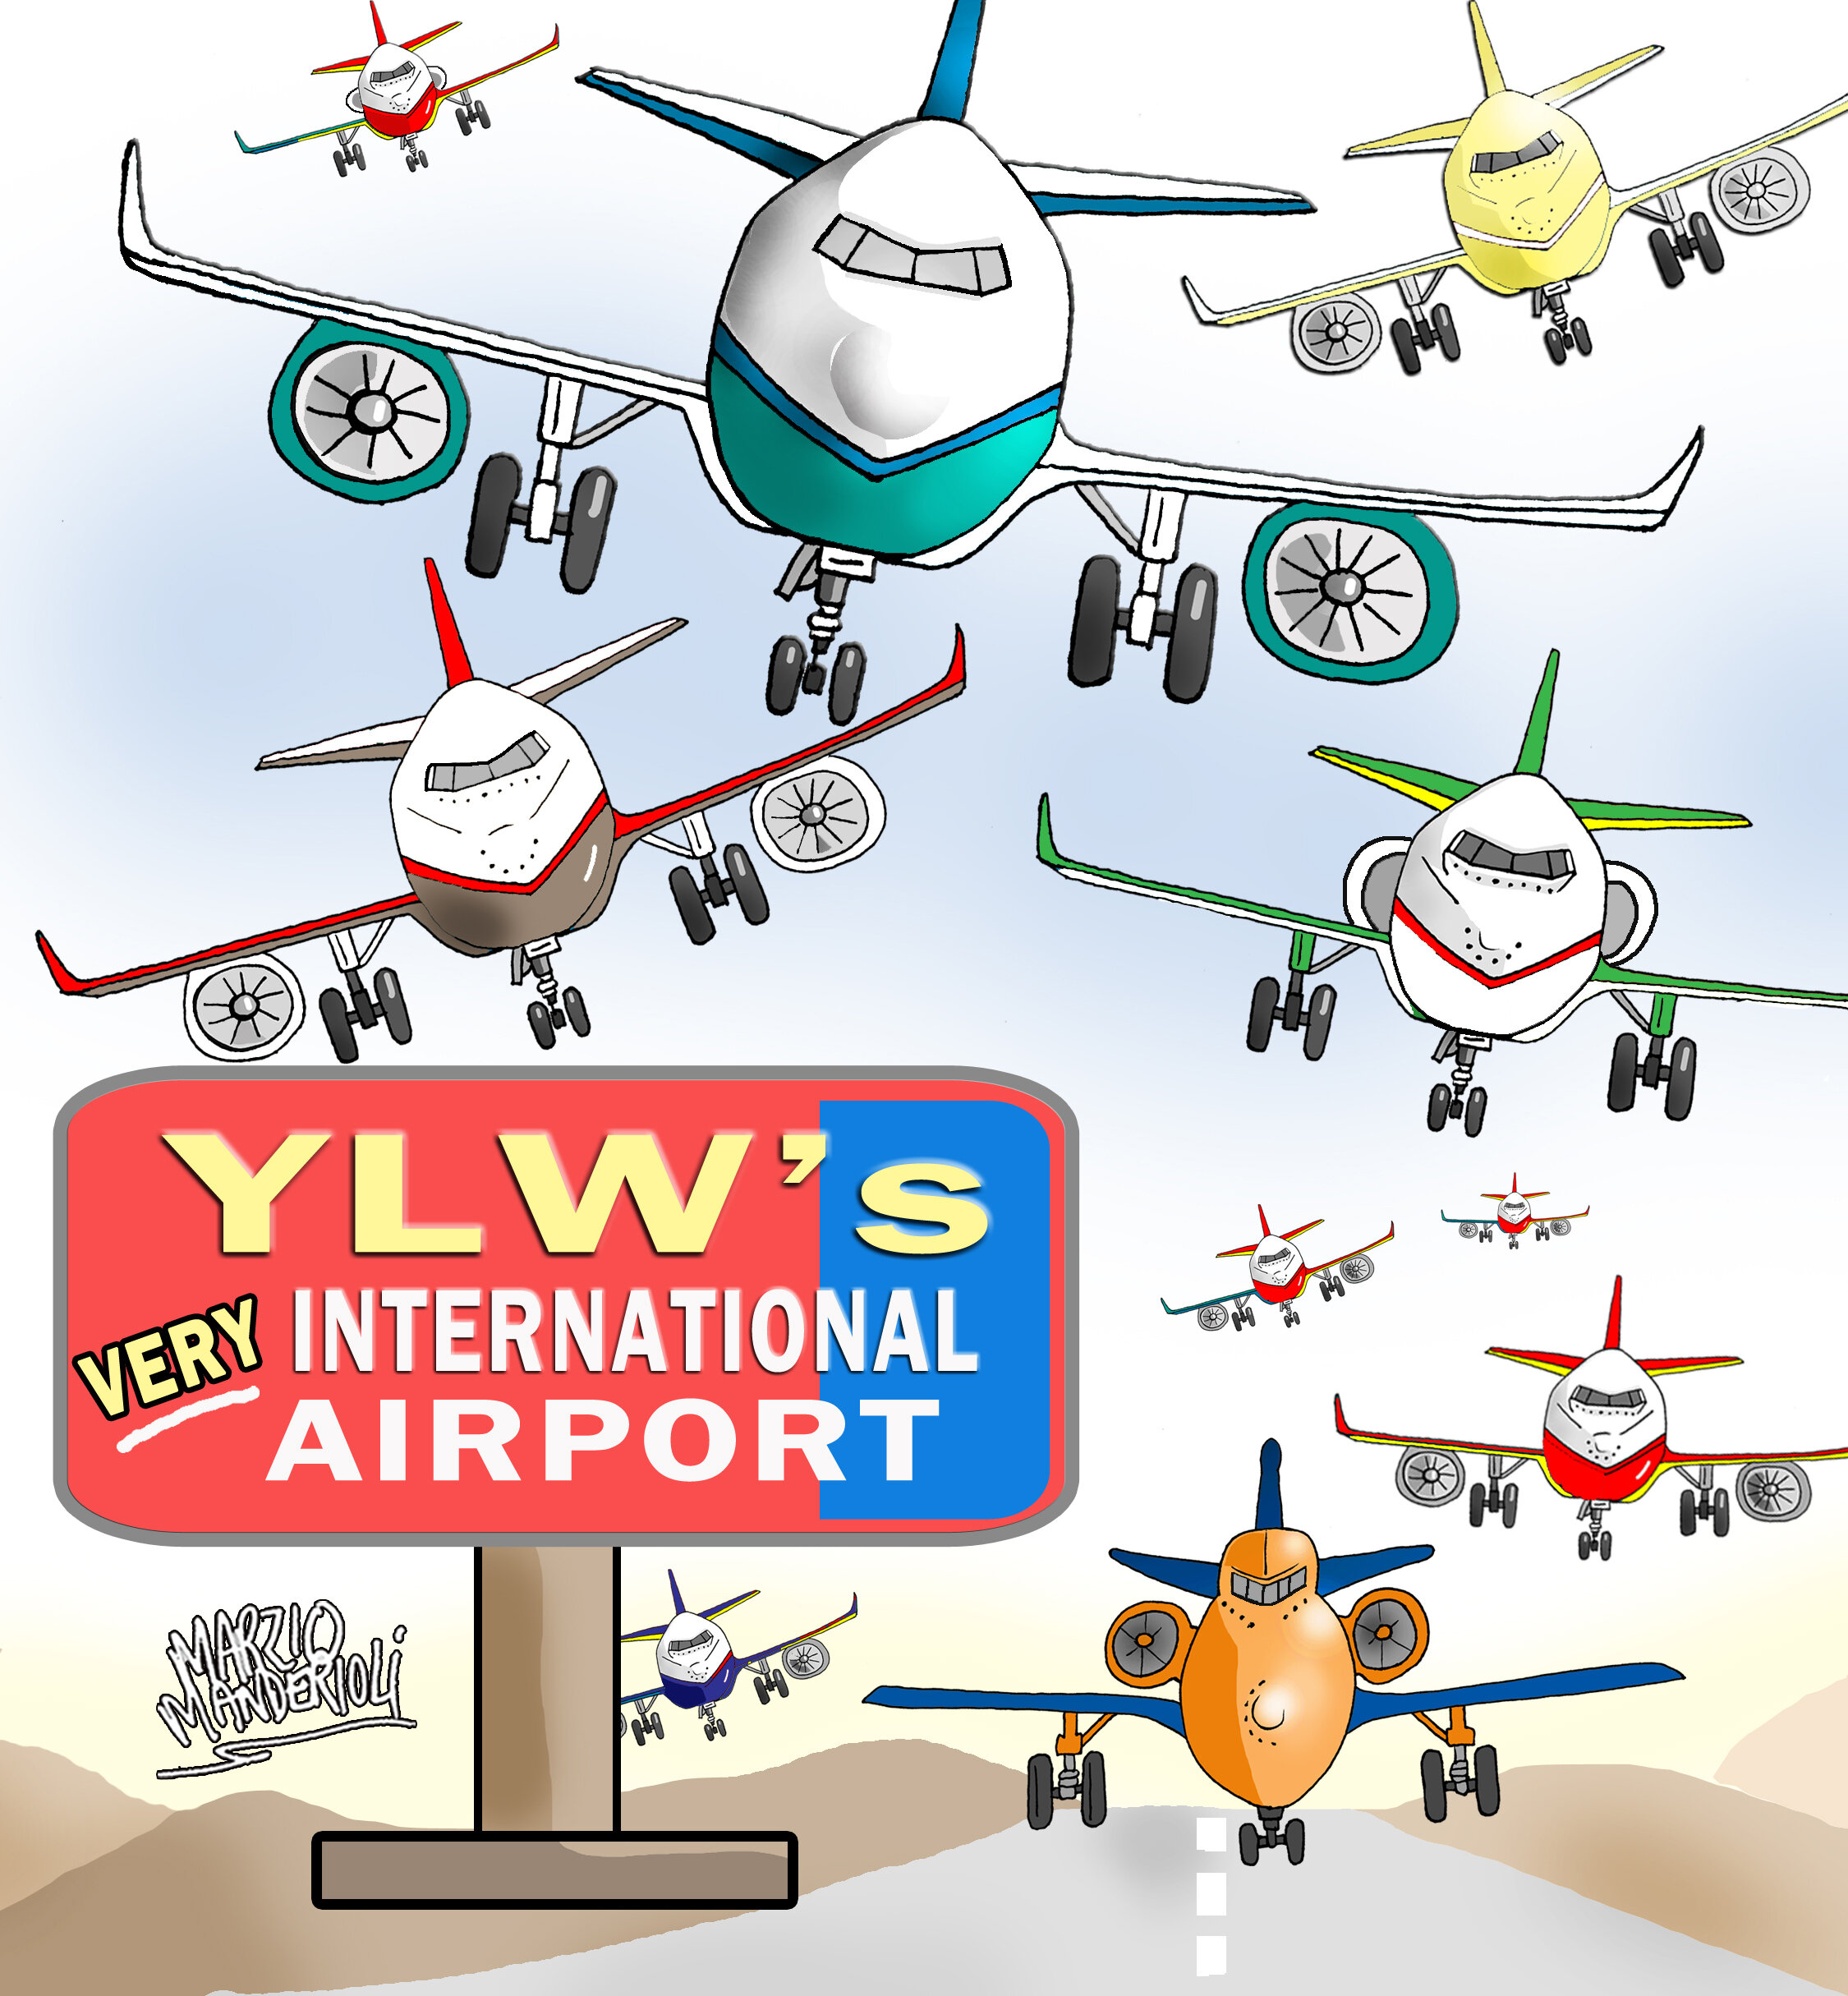 Airport traffic cartoon.jpg